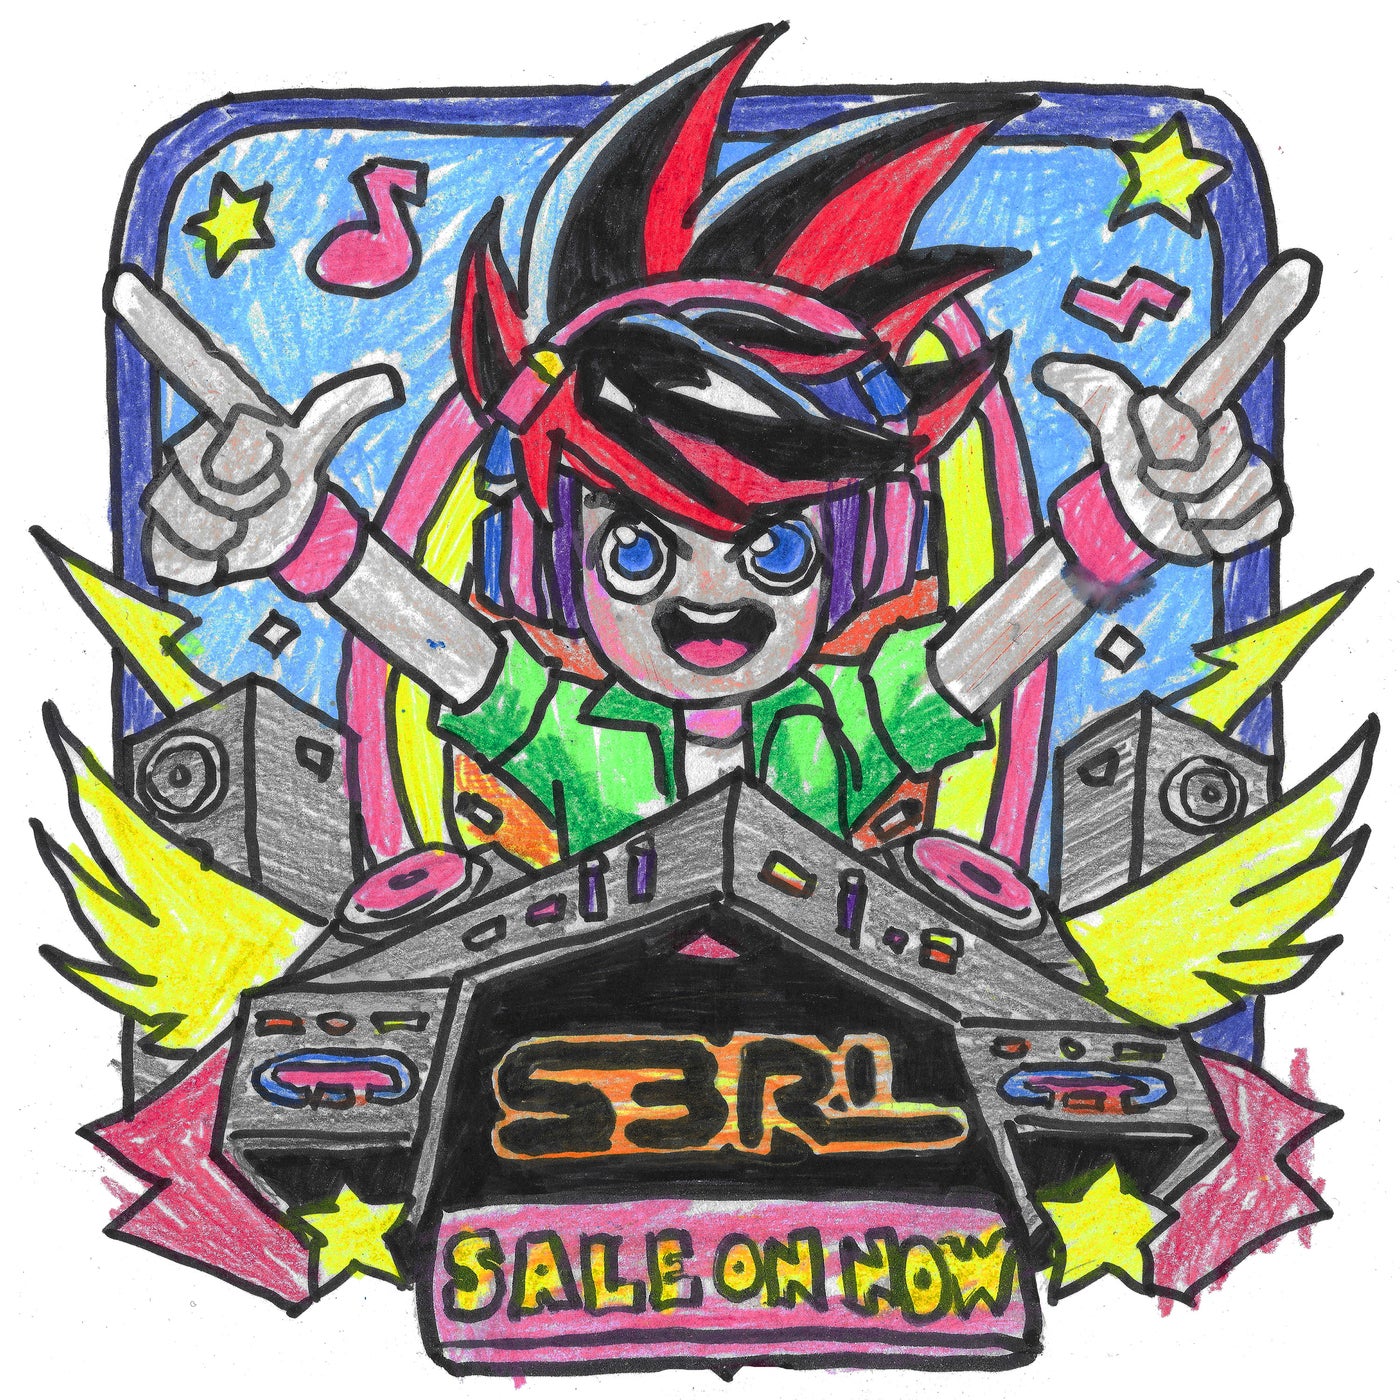 Sale On Now! (DJ Edit)